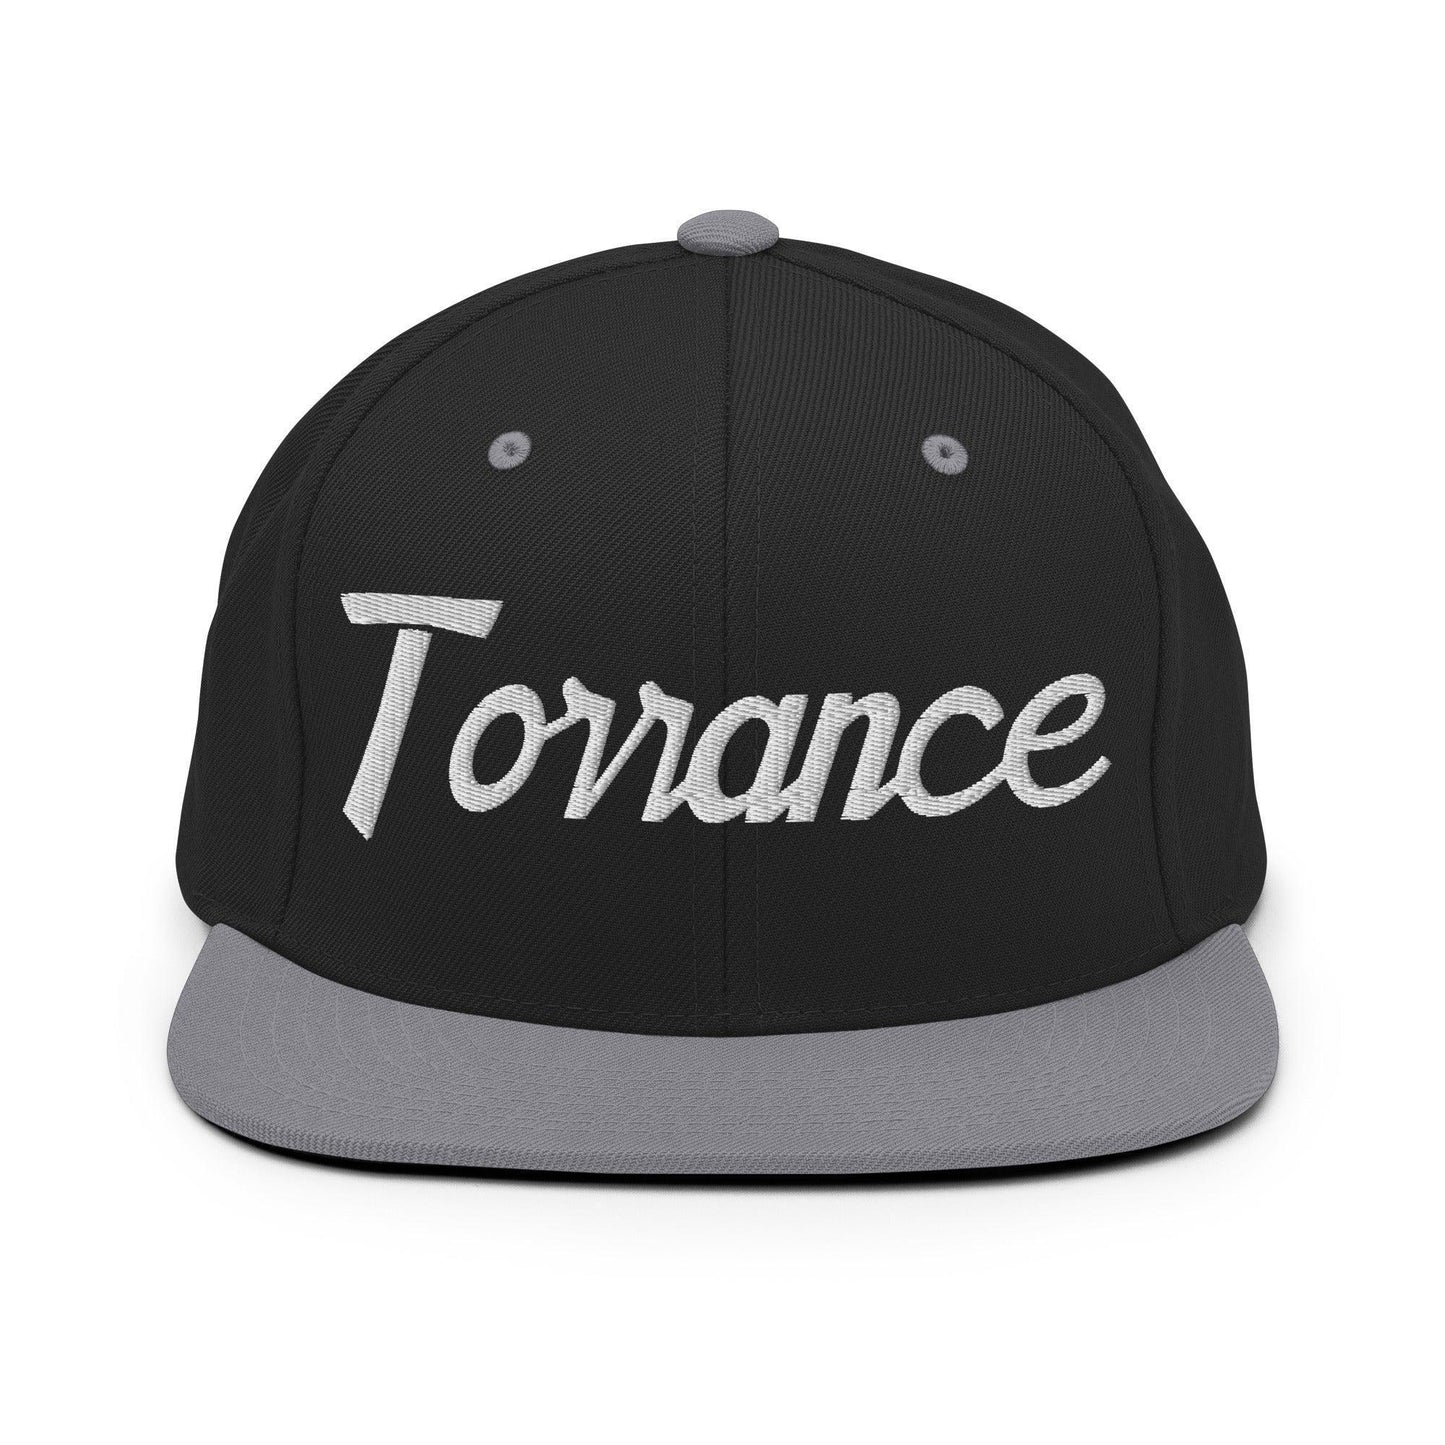 Torrance Script Snapback Hat Black Silver